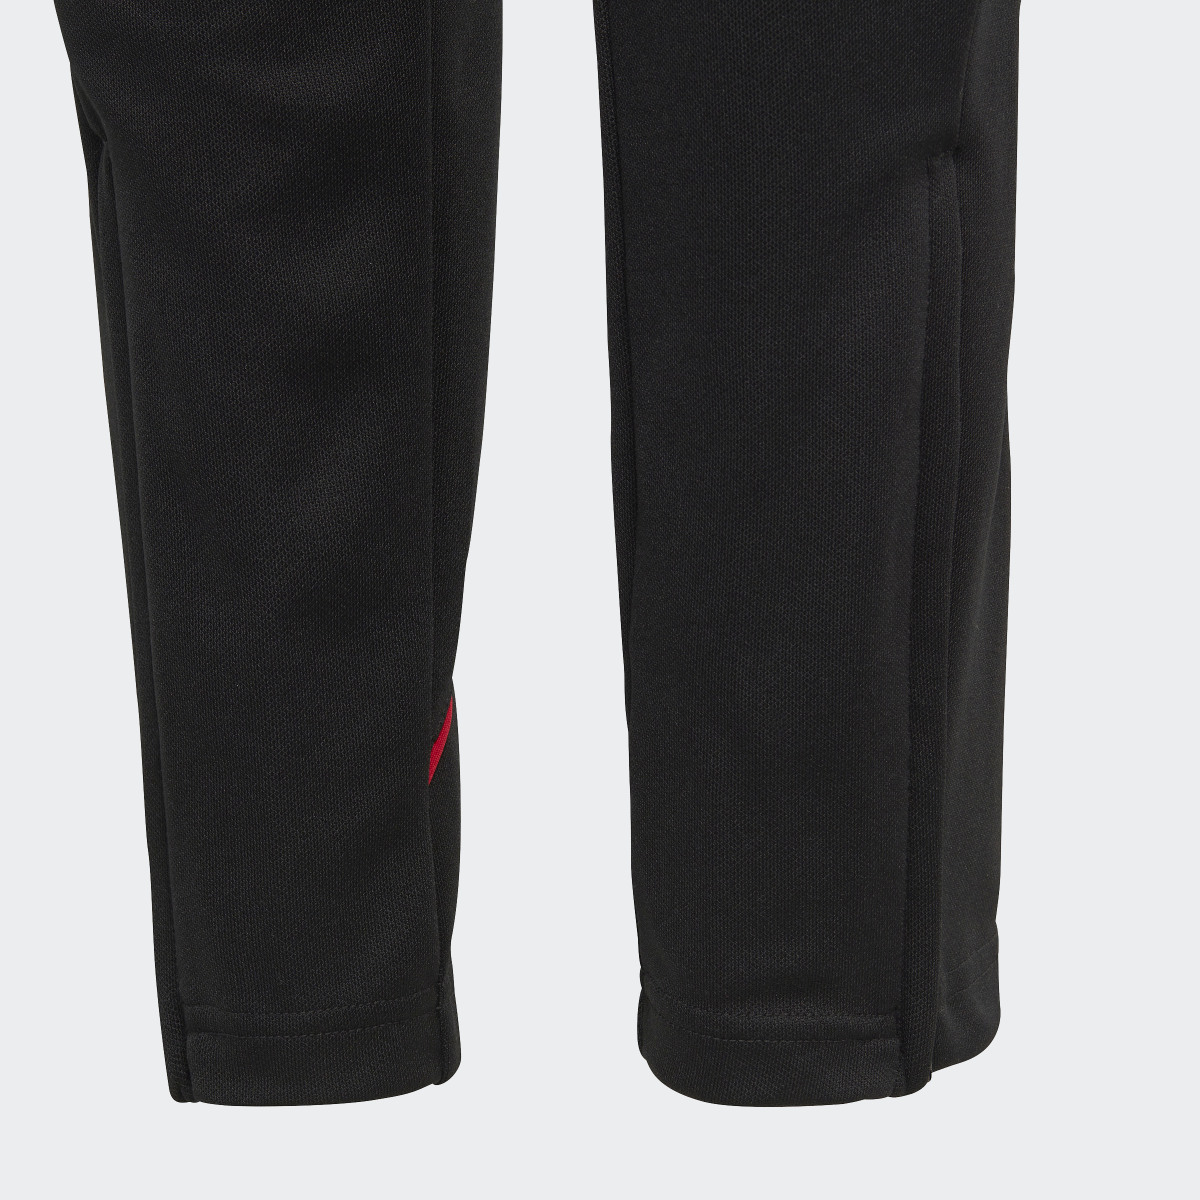 Adidas Tiro Pants. 4